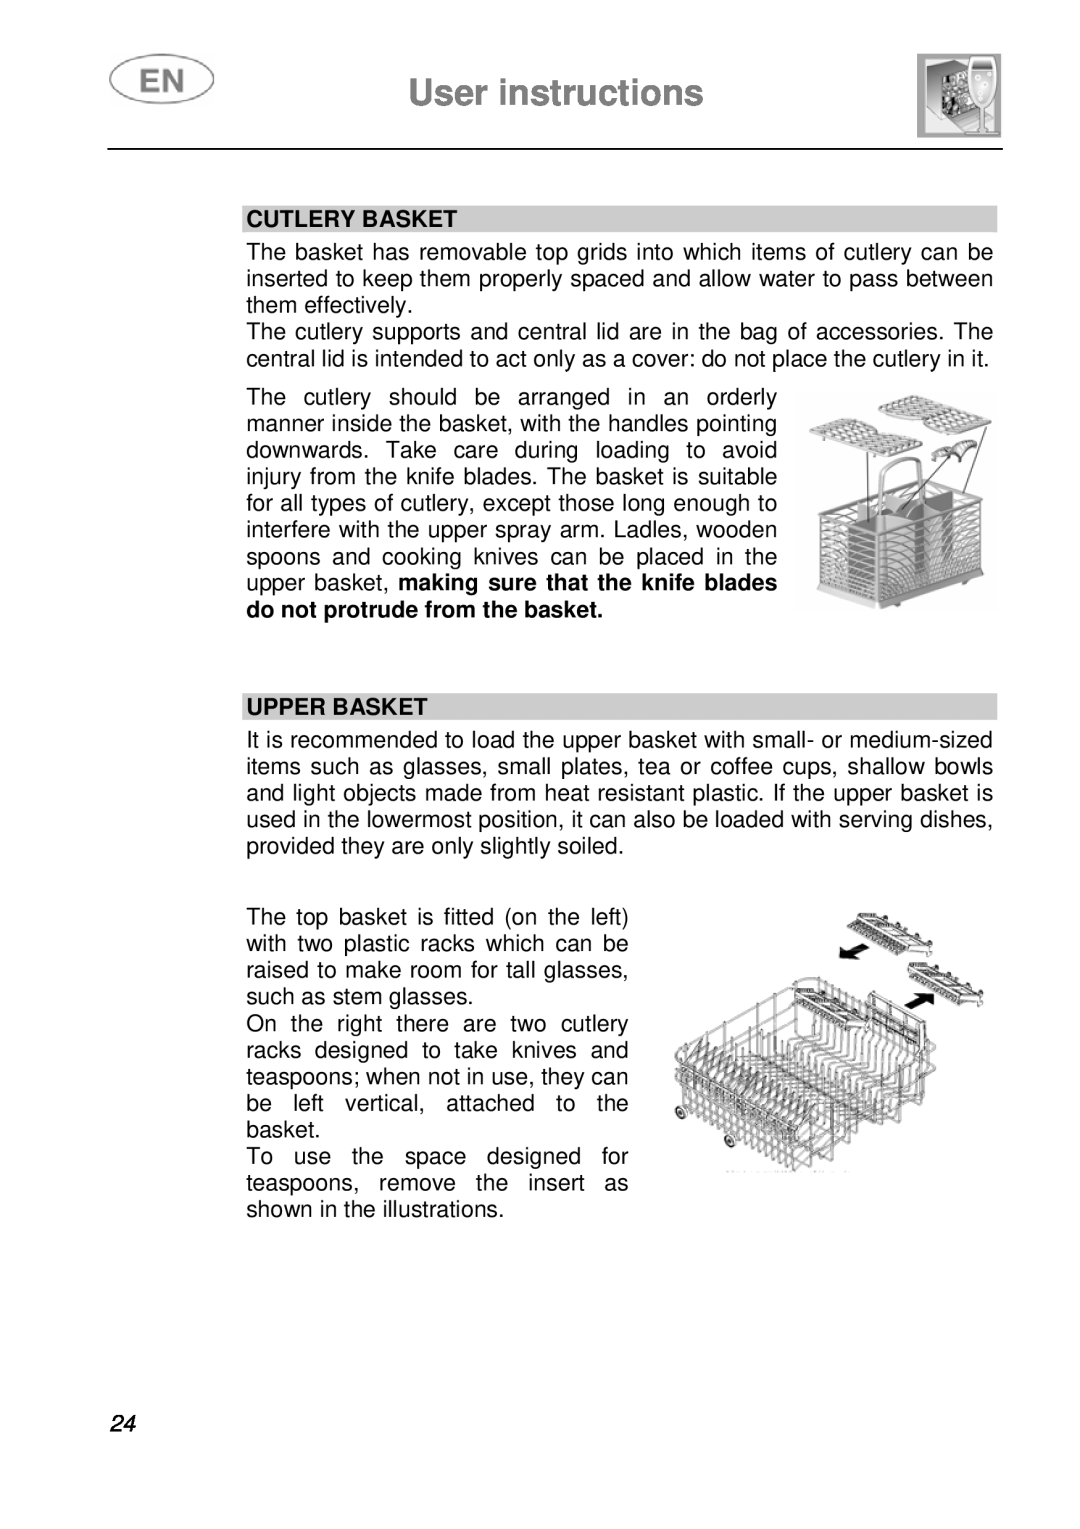 Smeg KLS55B instruction manual Cutlery Basket, Upper Basket, User instructions 